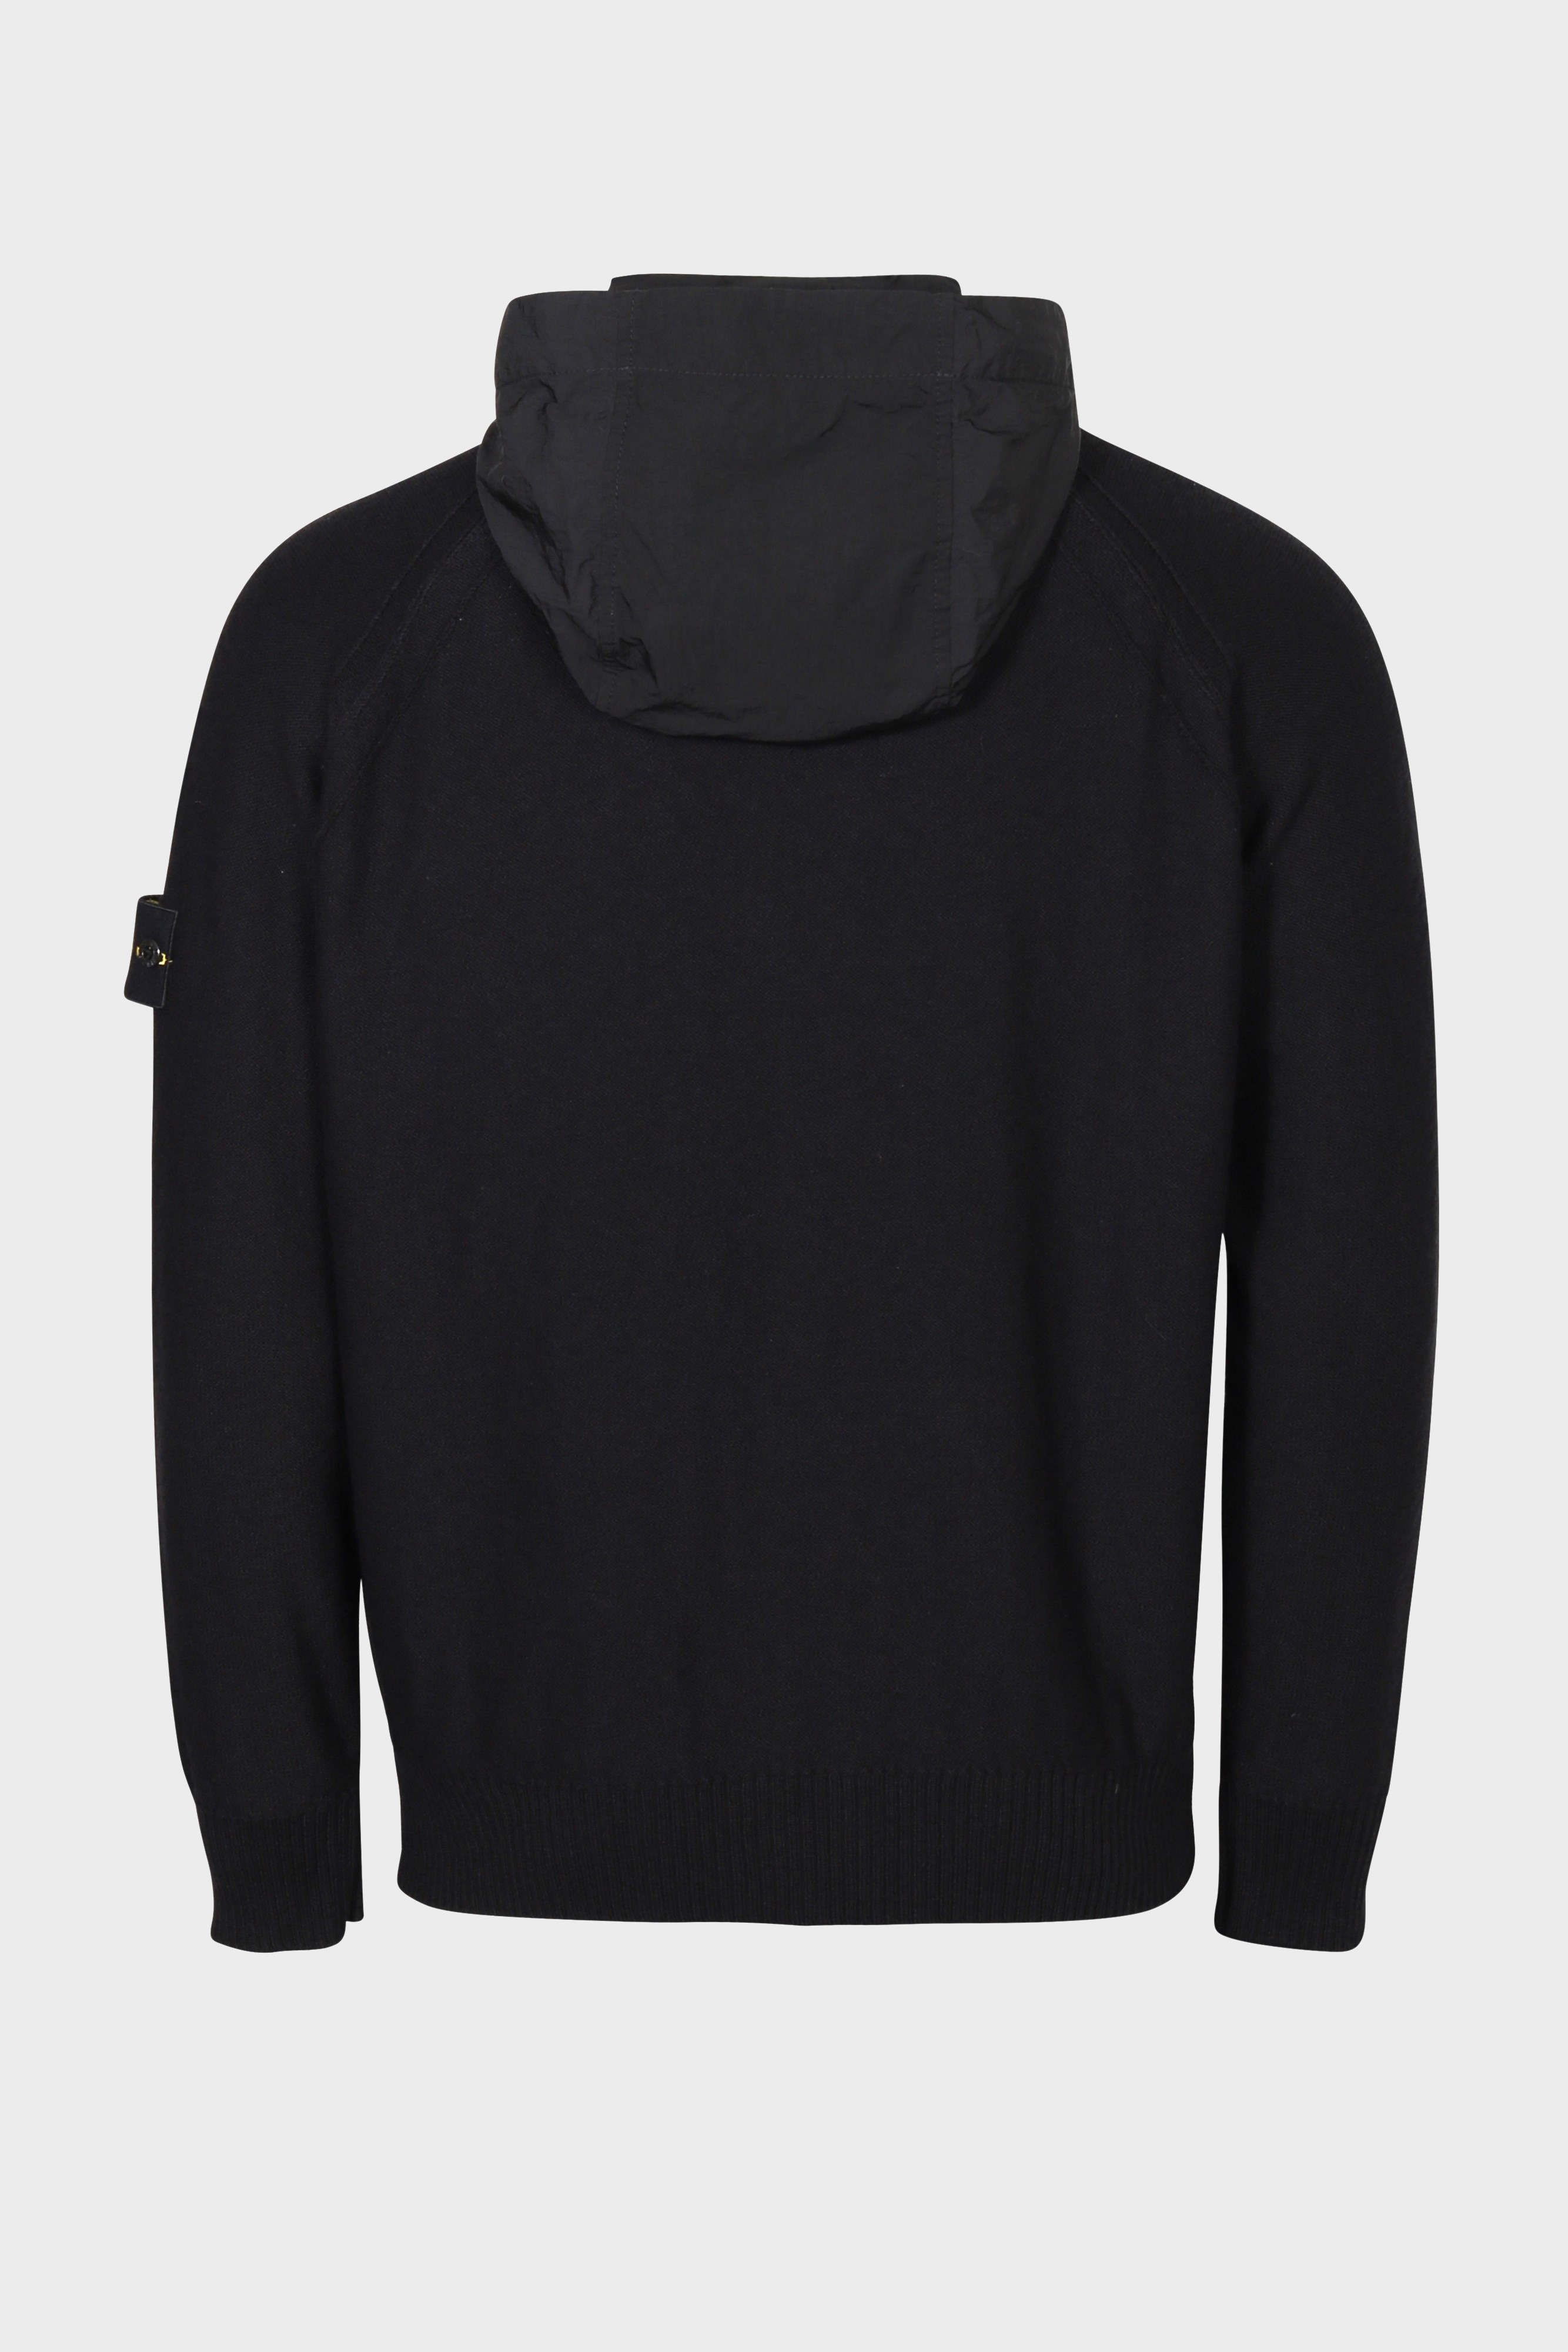 STONE ISLAND Nylon Hooded Knit Jacket in Black XL